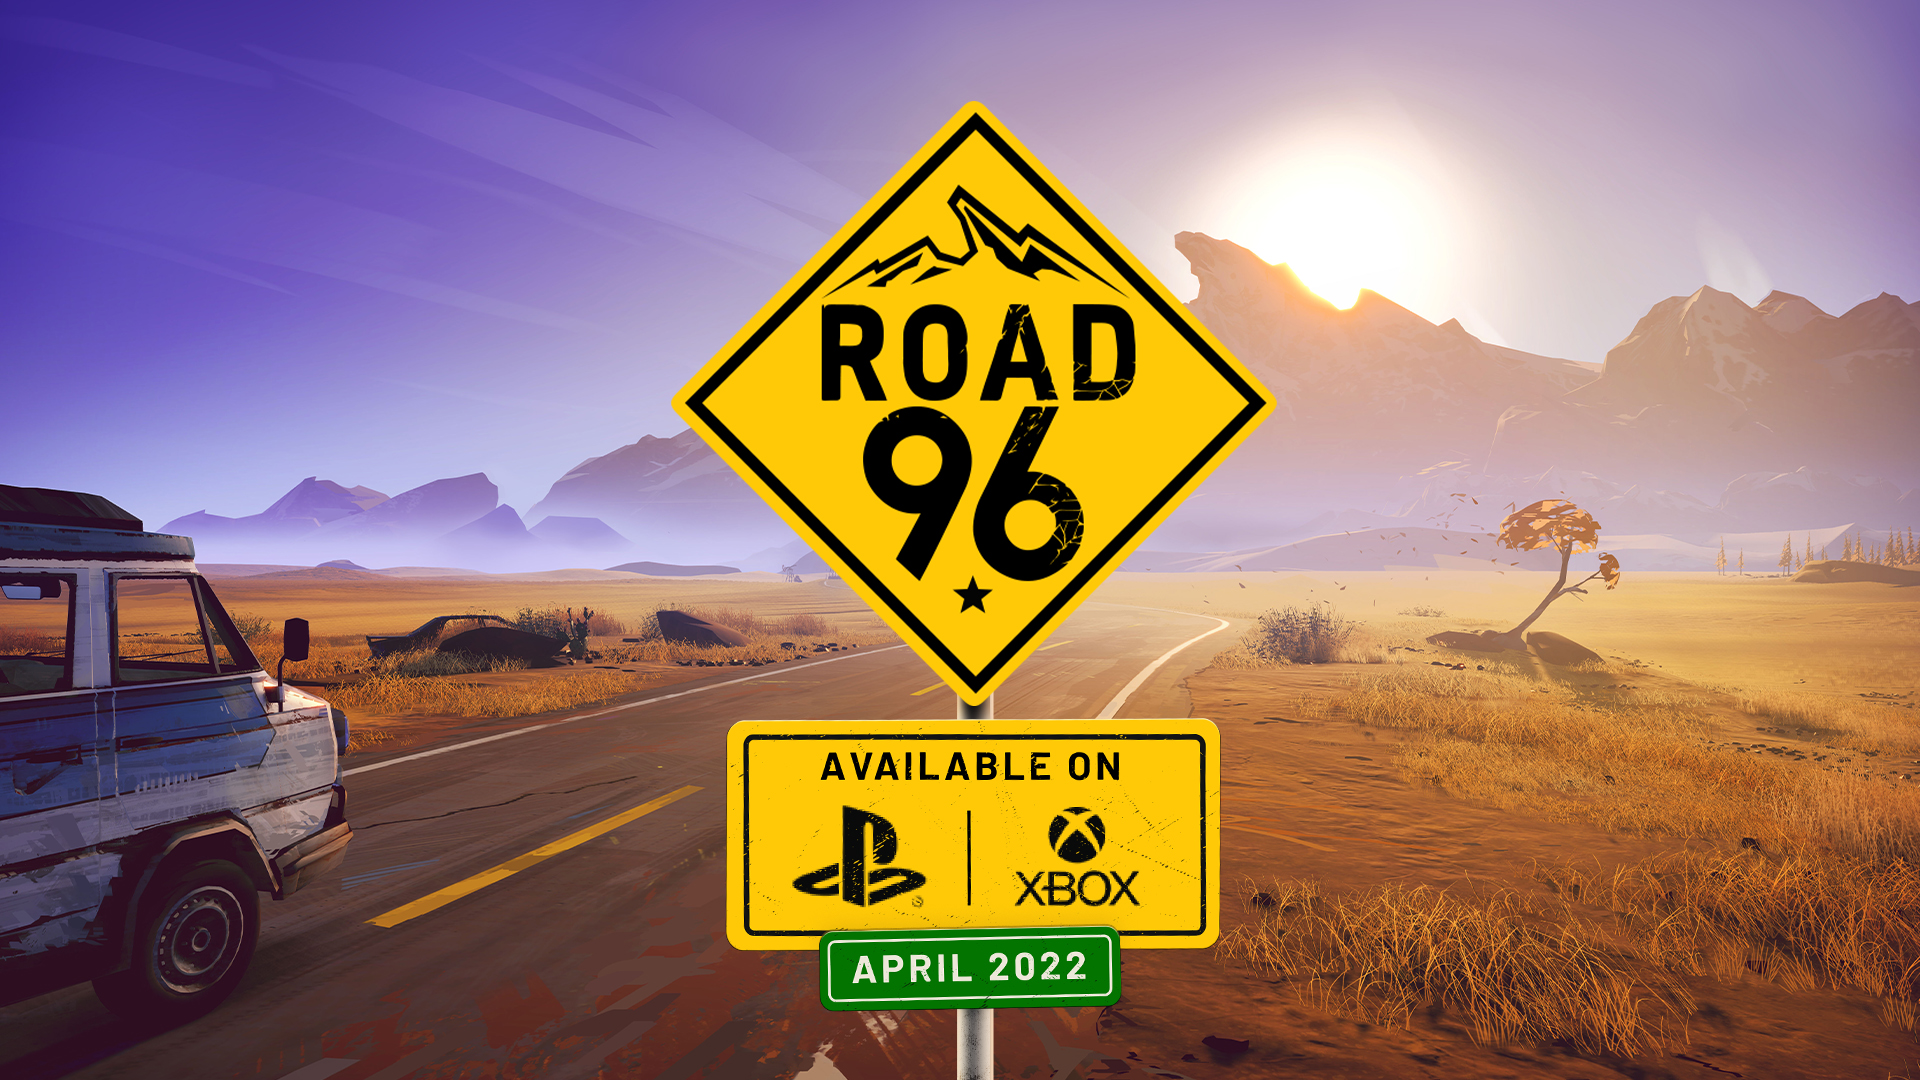 Road 96 про путешествие автостопом выйдет на Xbox в апреле